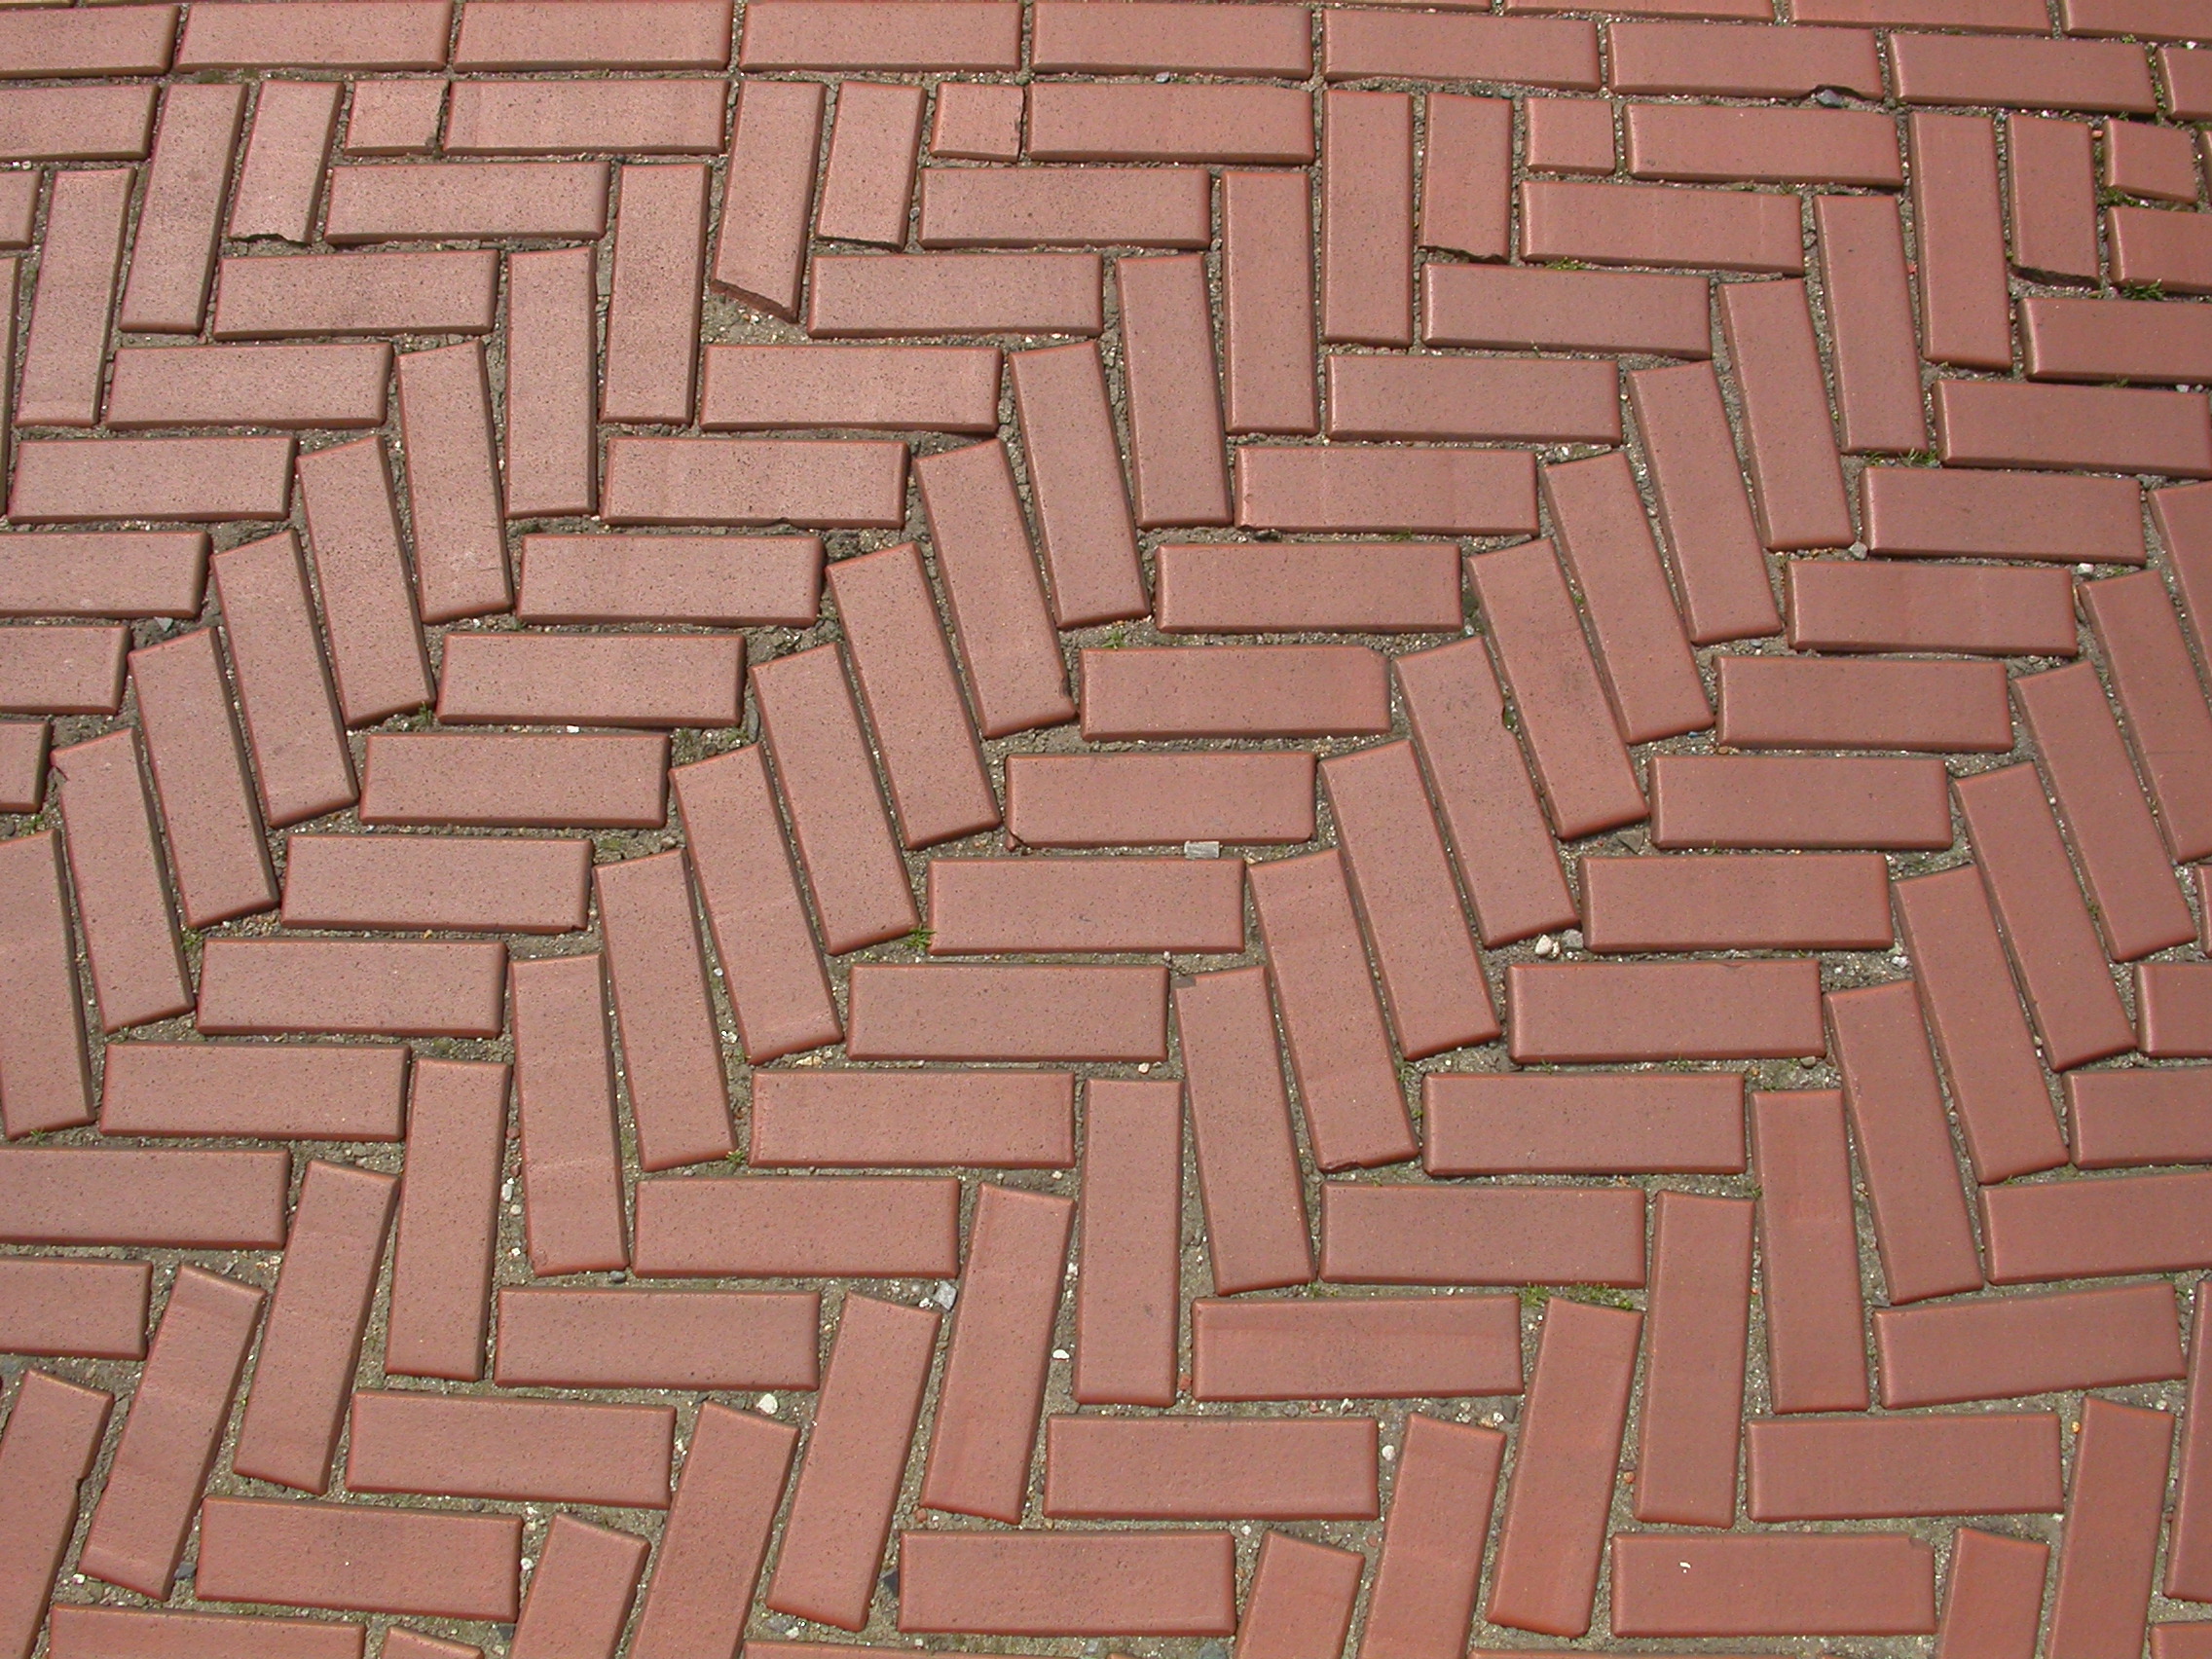 paul brick bricks grid like pattern red square